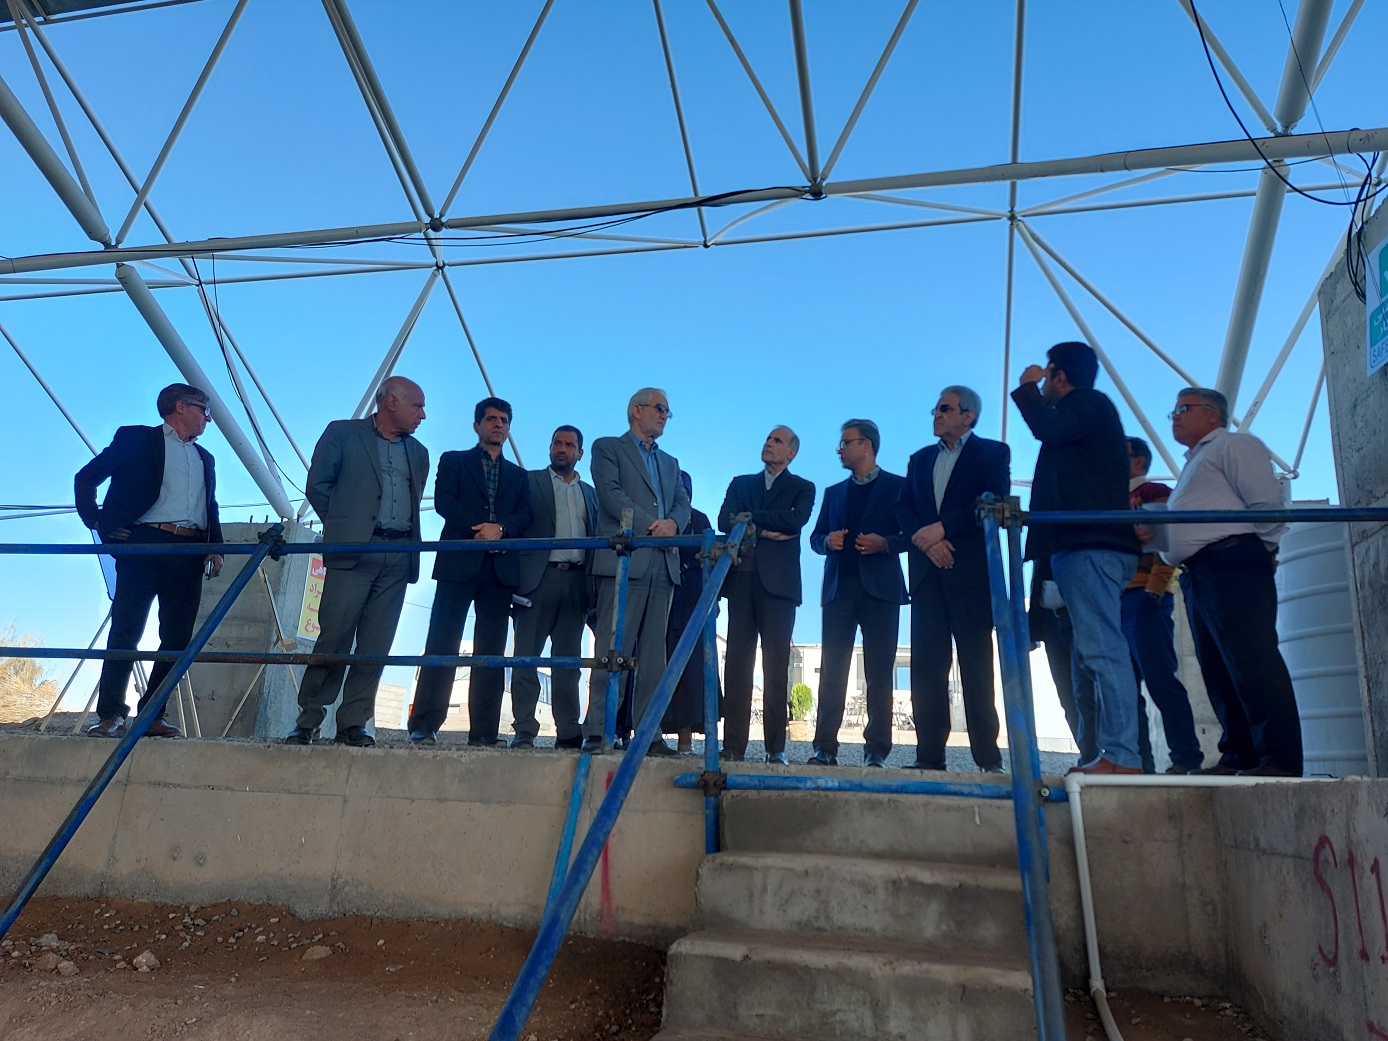 Kerman Civil Engineering Organization Board Members Visit the Region